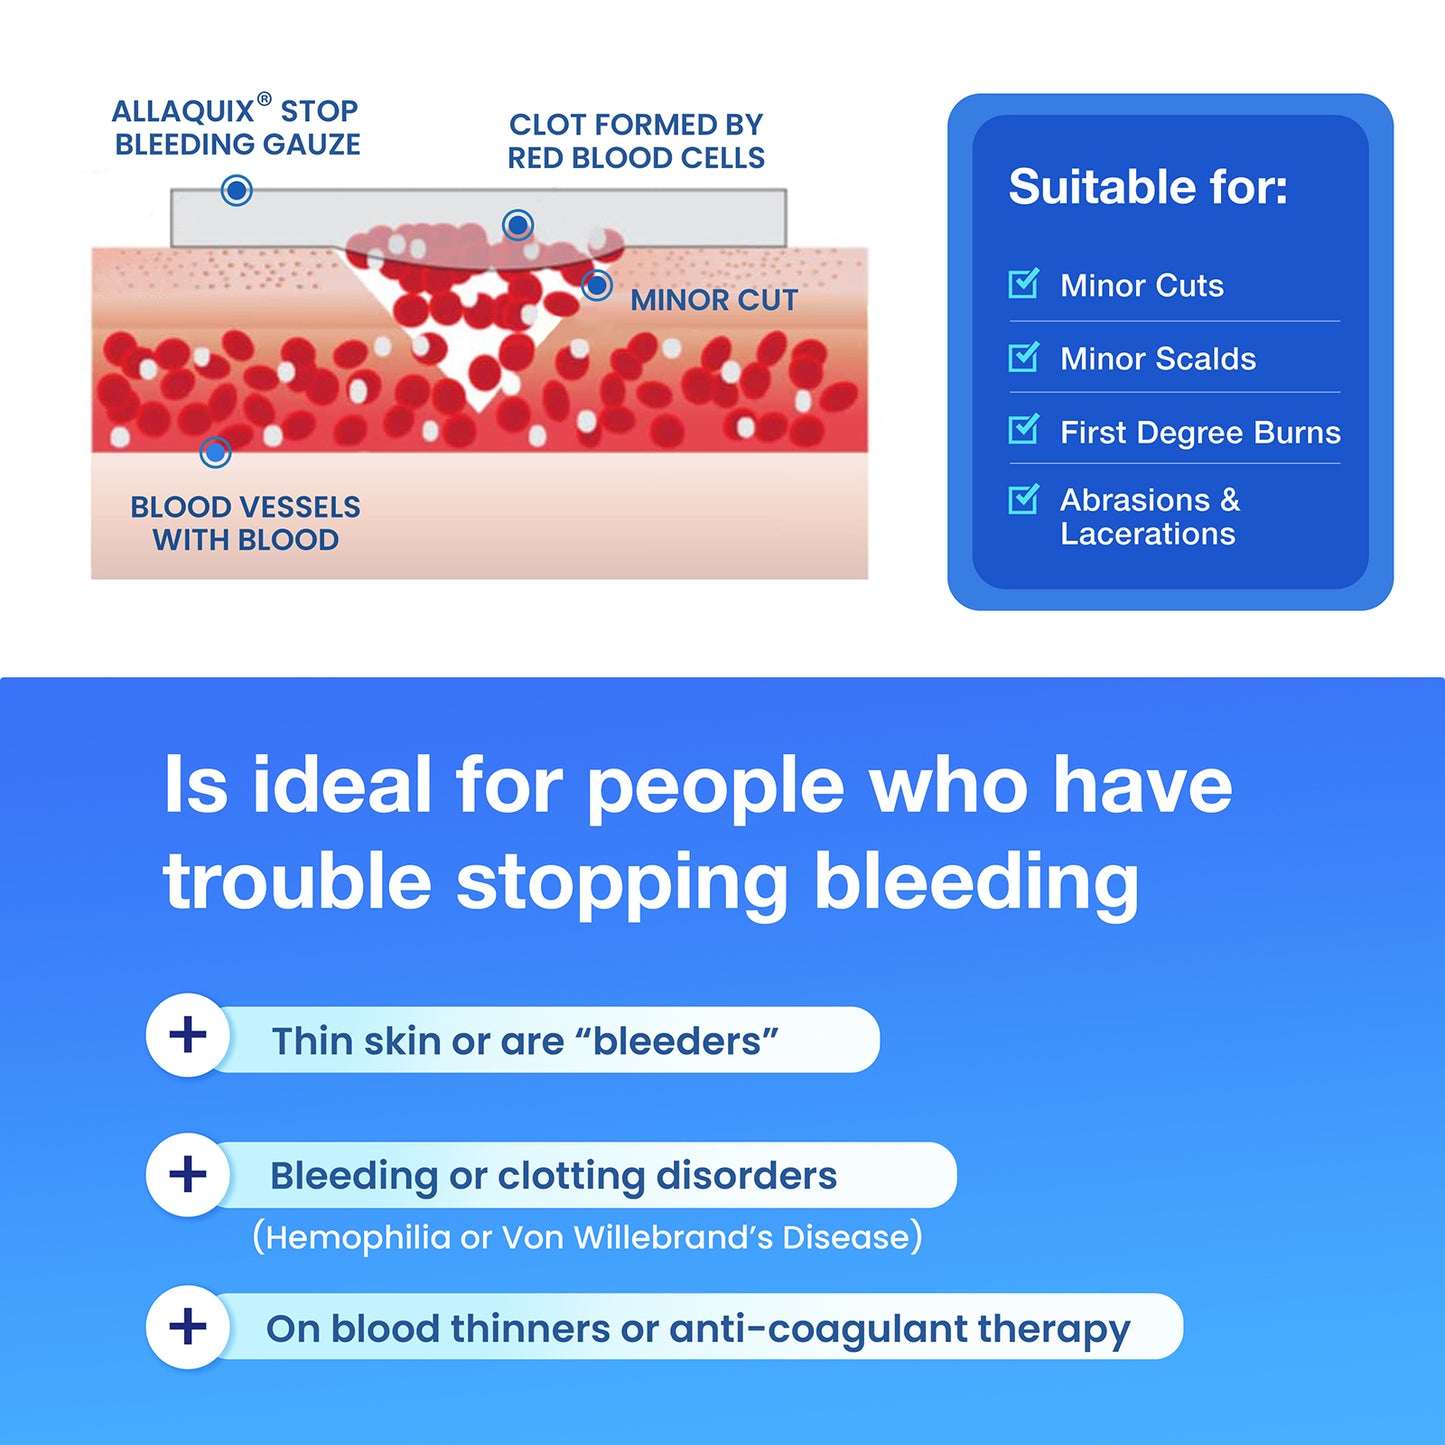 AllaQuix Stop Bleeding Gauze Variety Pack